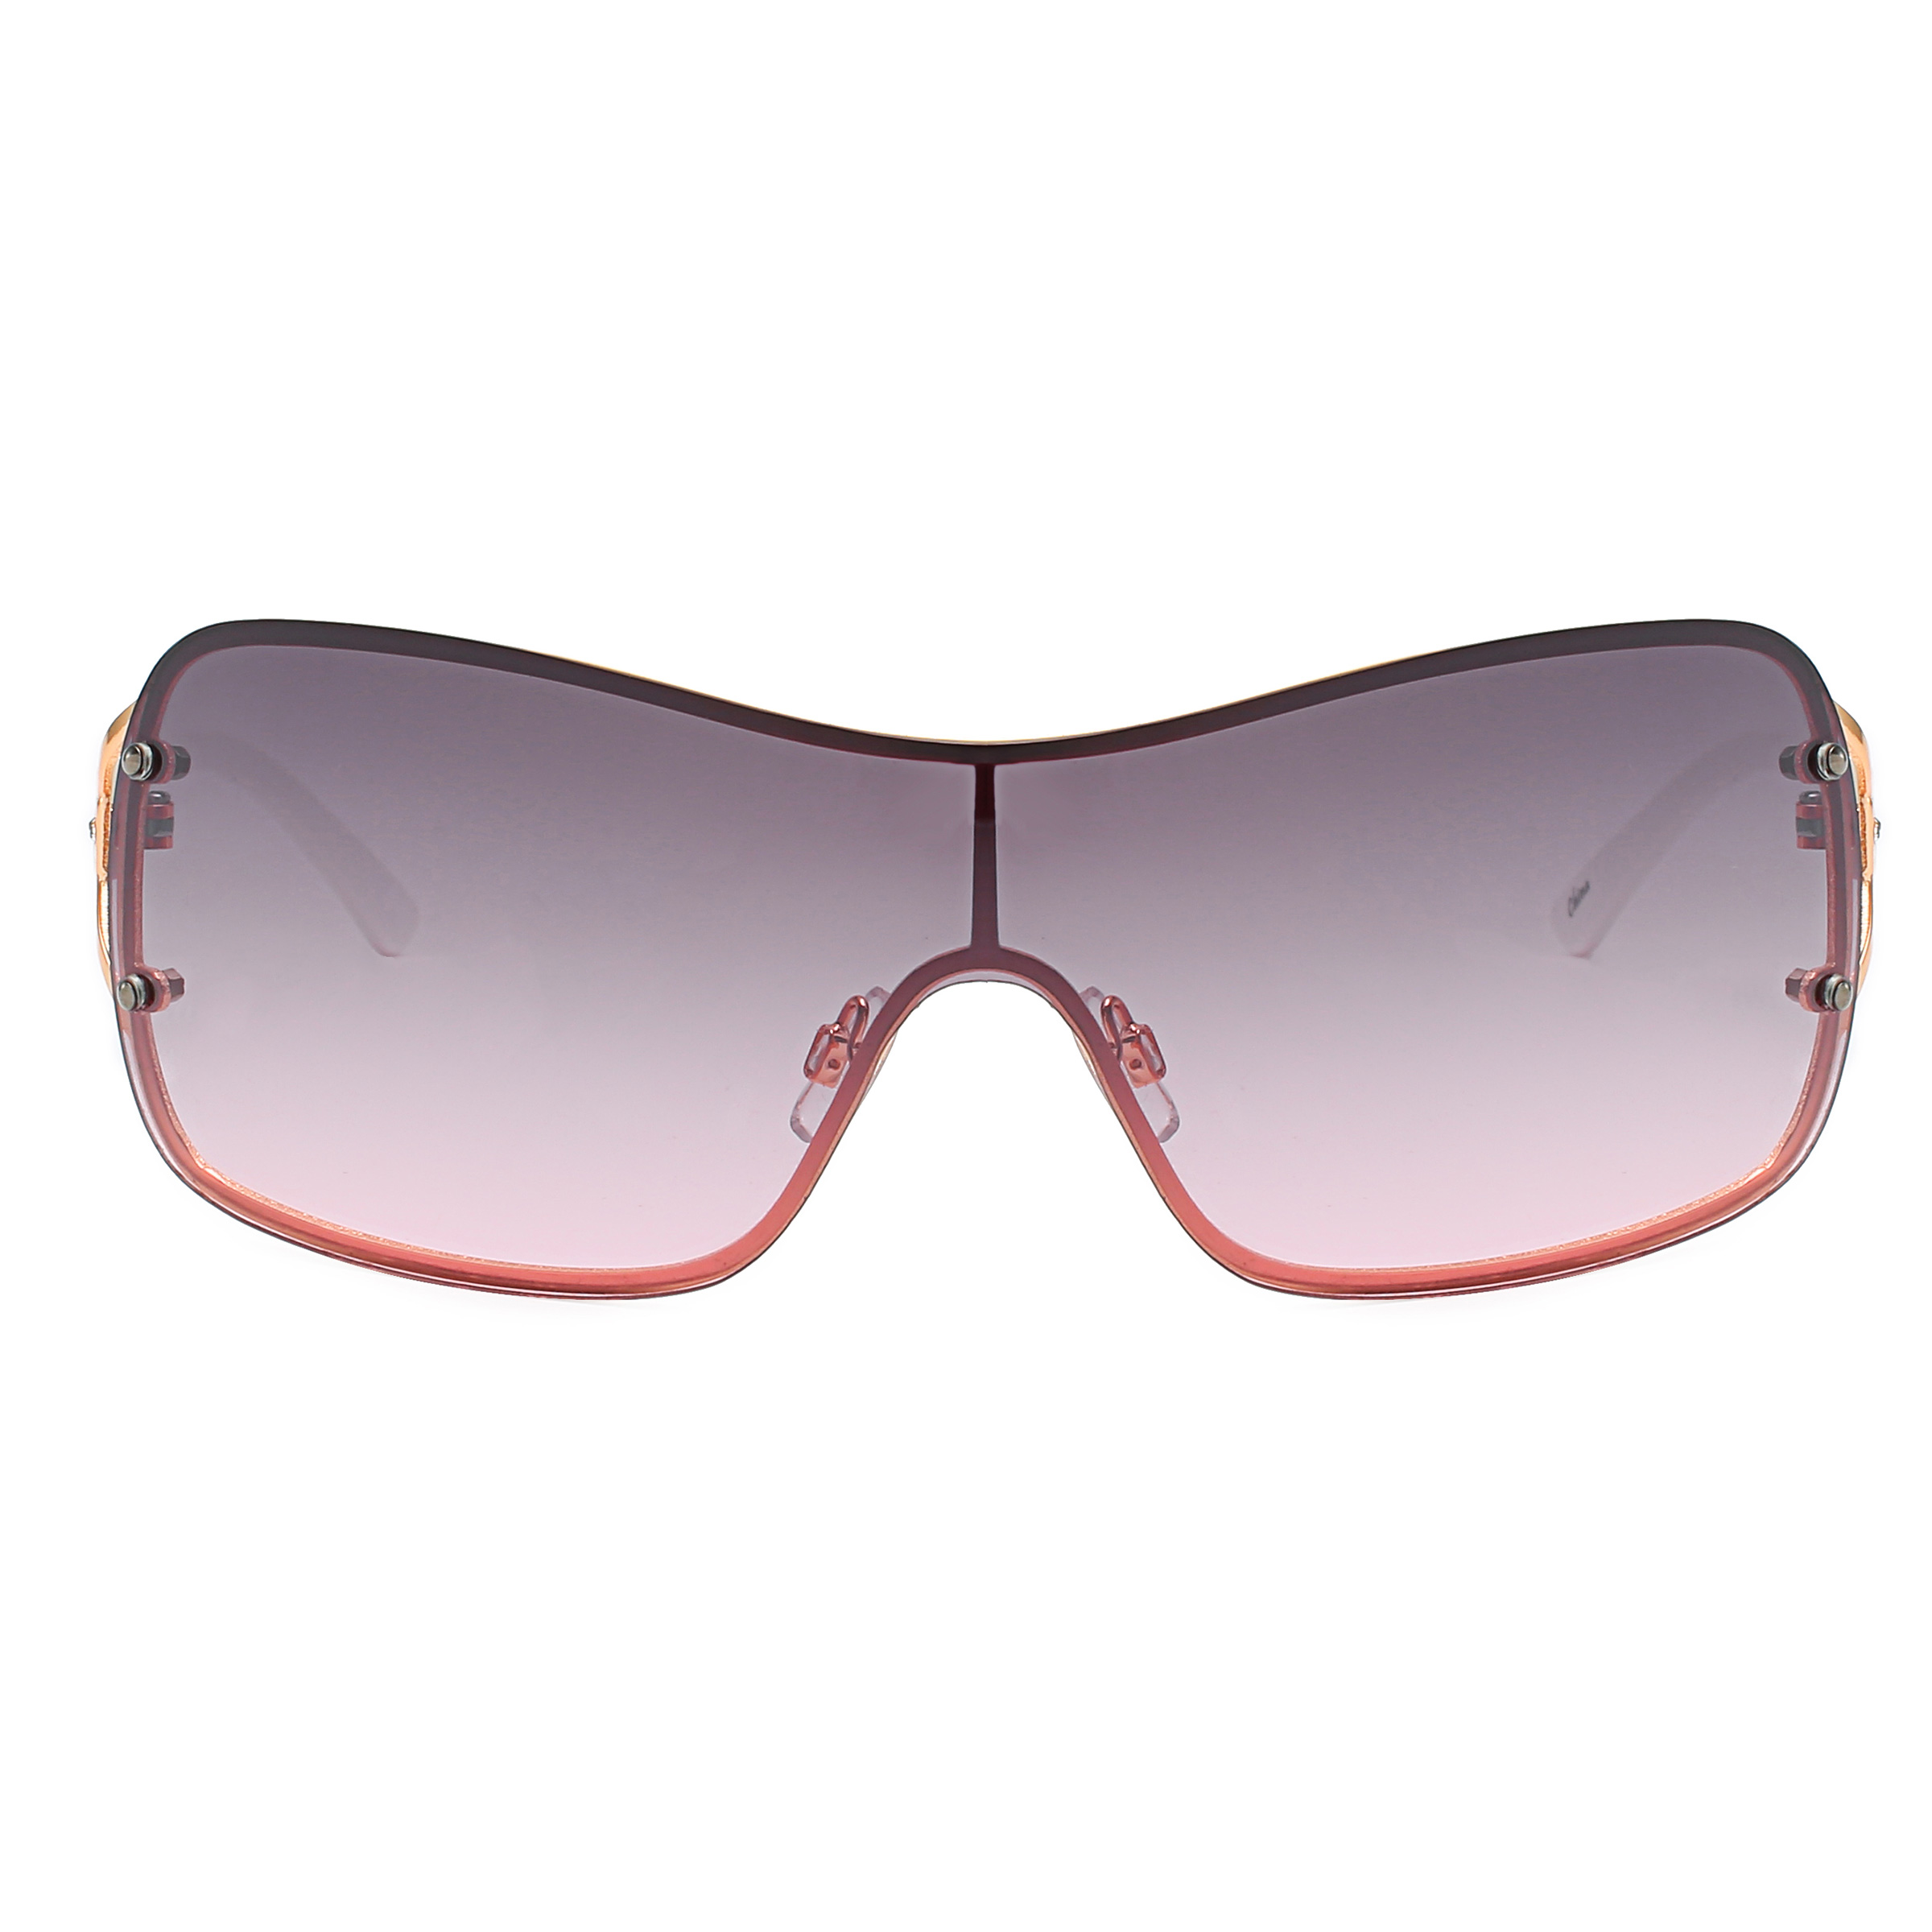 Piranha Eyewear Birkin Oversize Shield Sunglasses for Women with Purple Gradient Lens - image 2 of 3